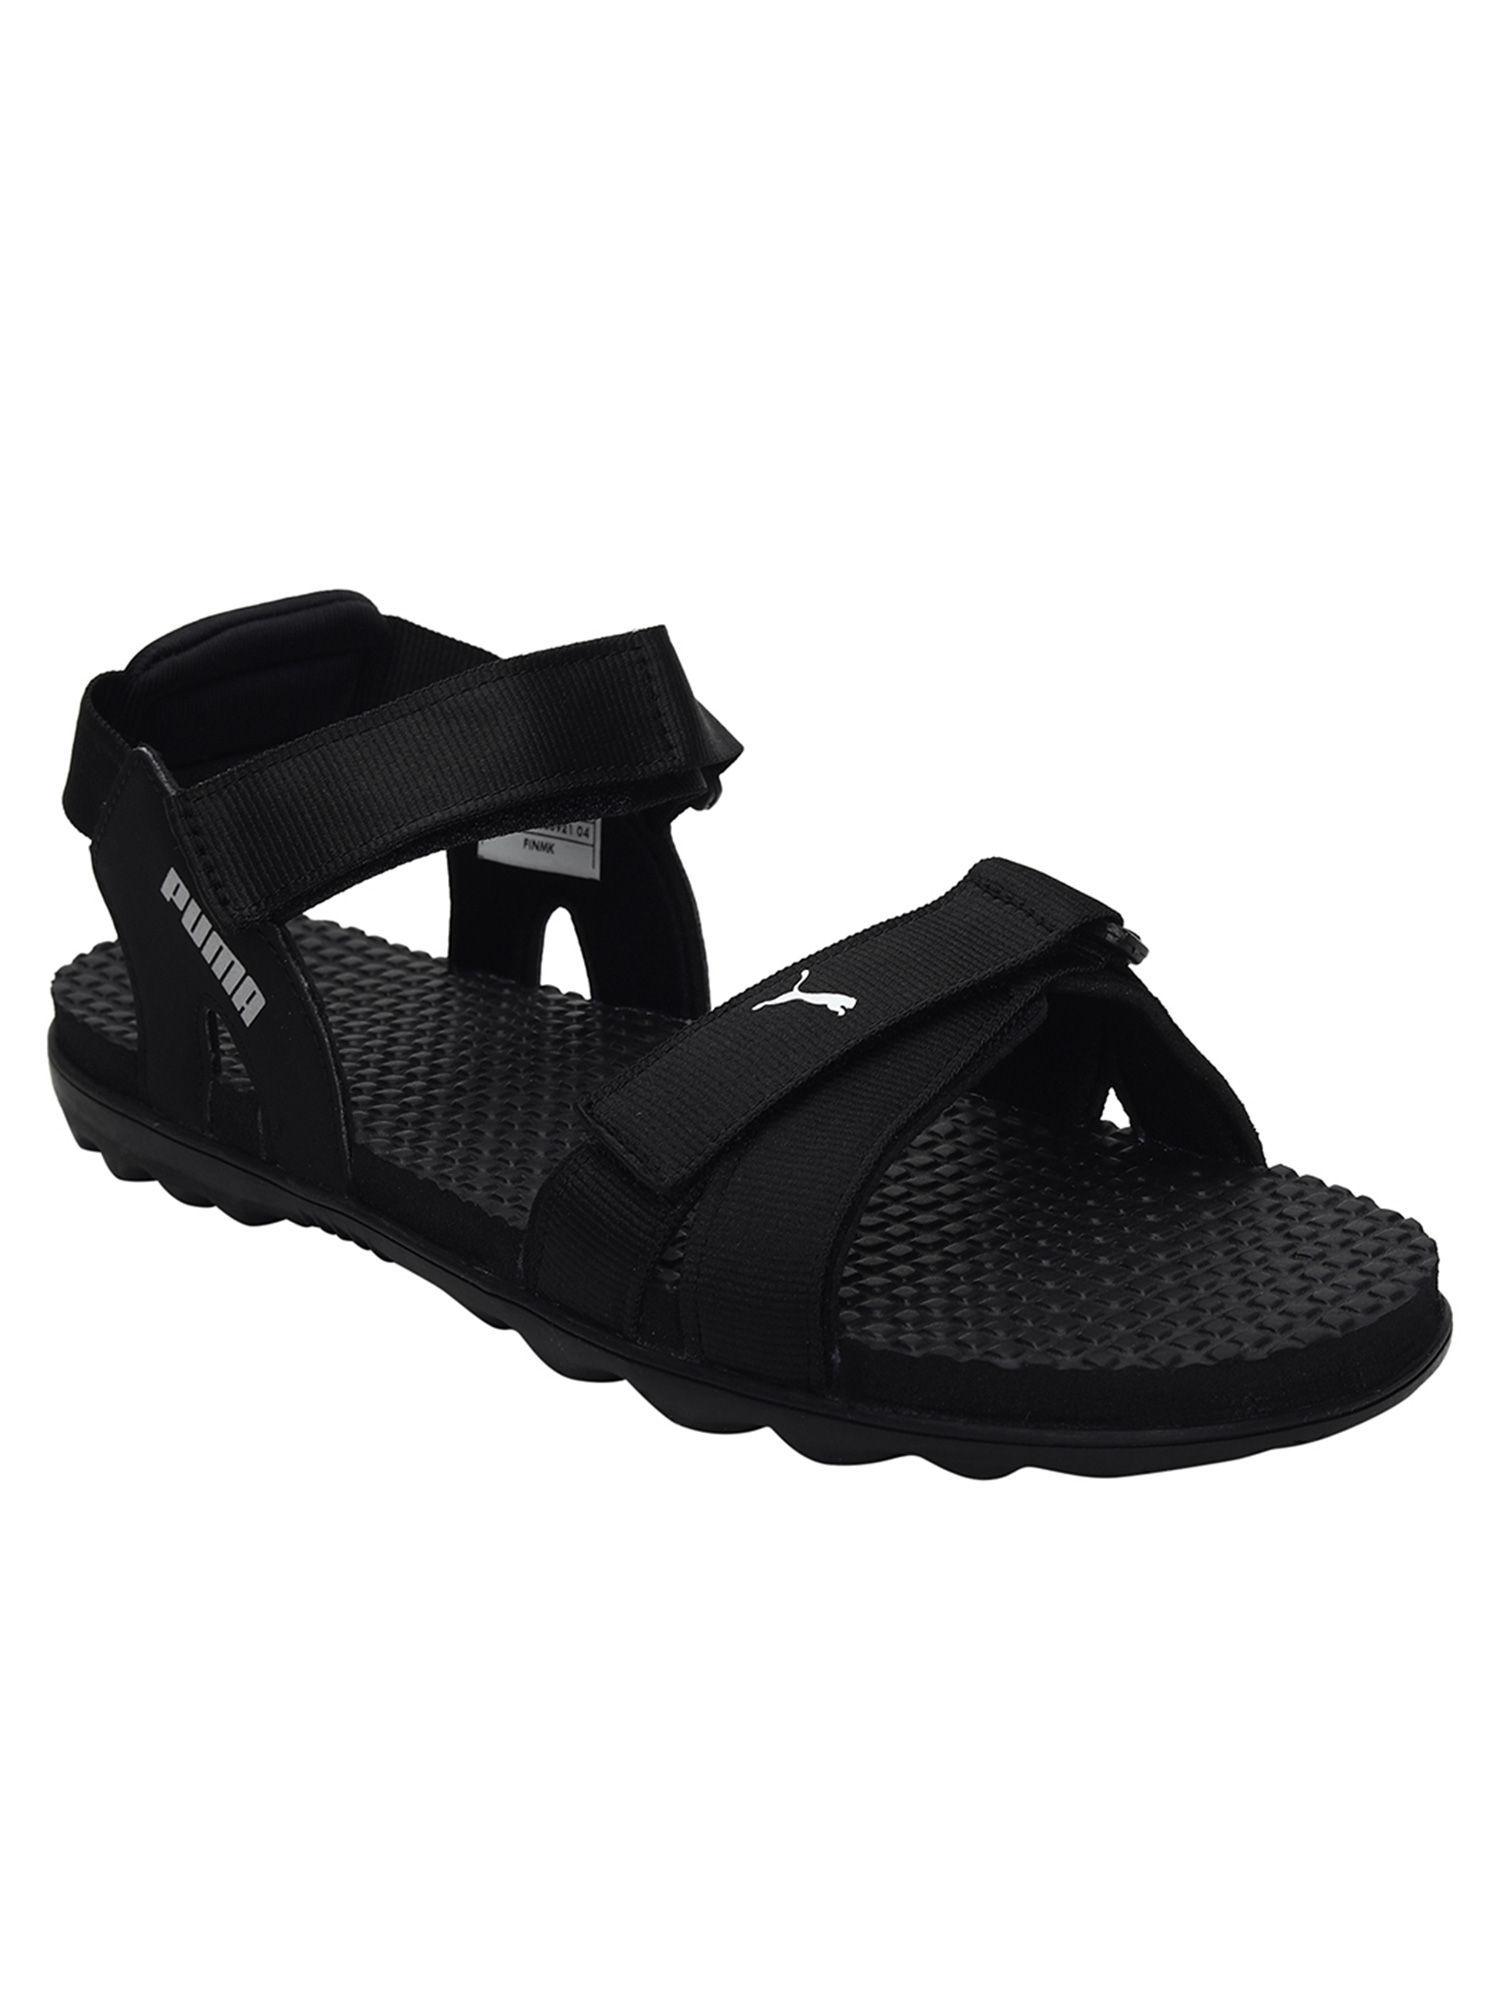 smooth men's black sports sandals